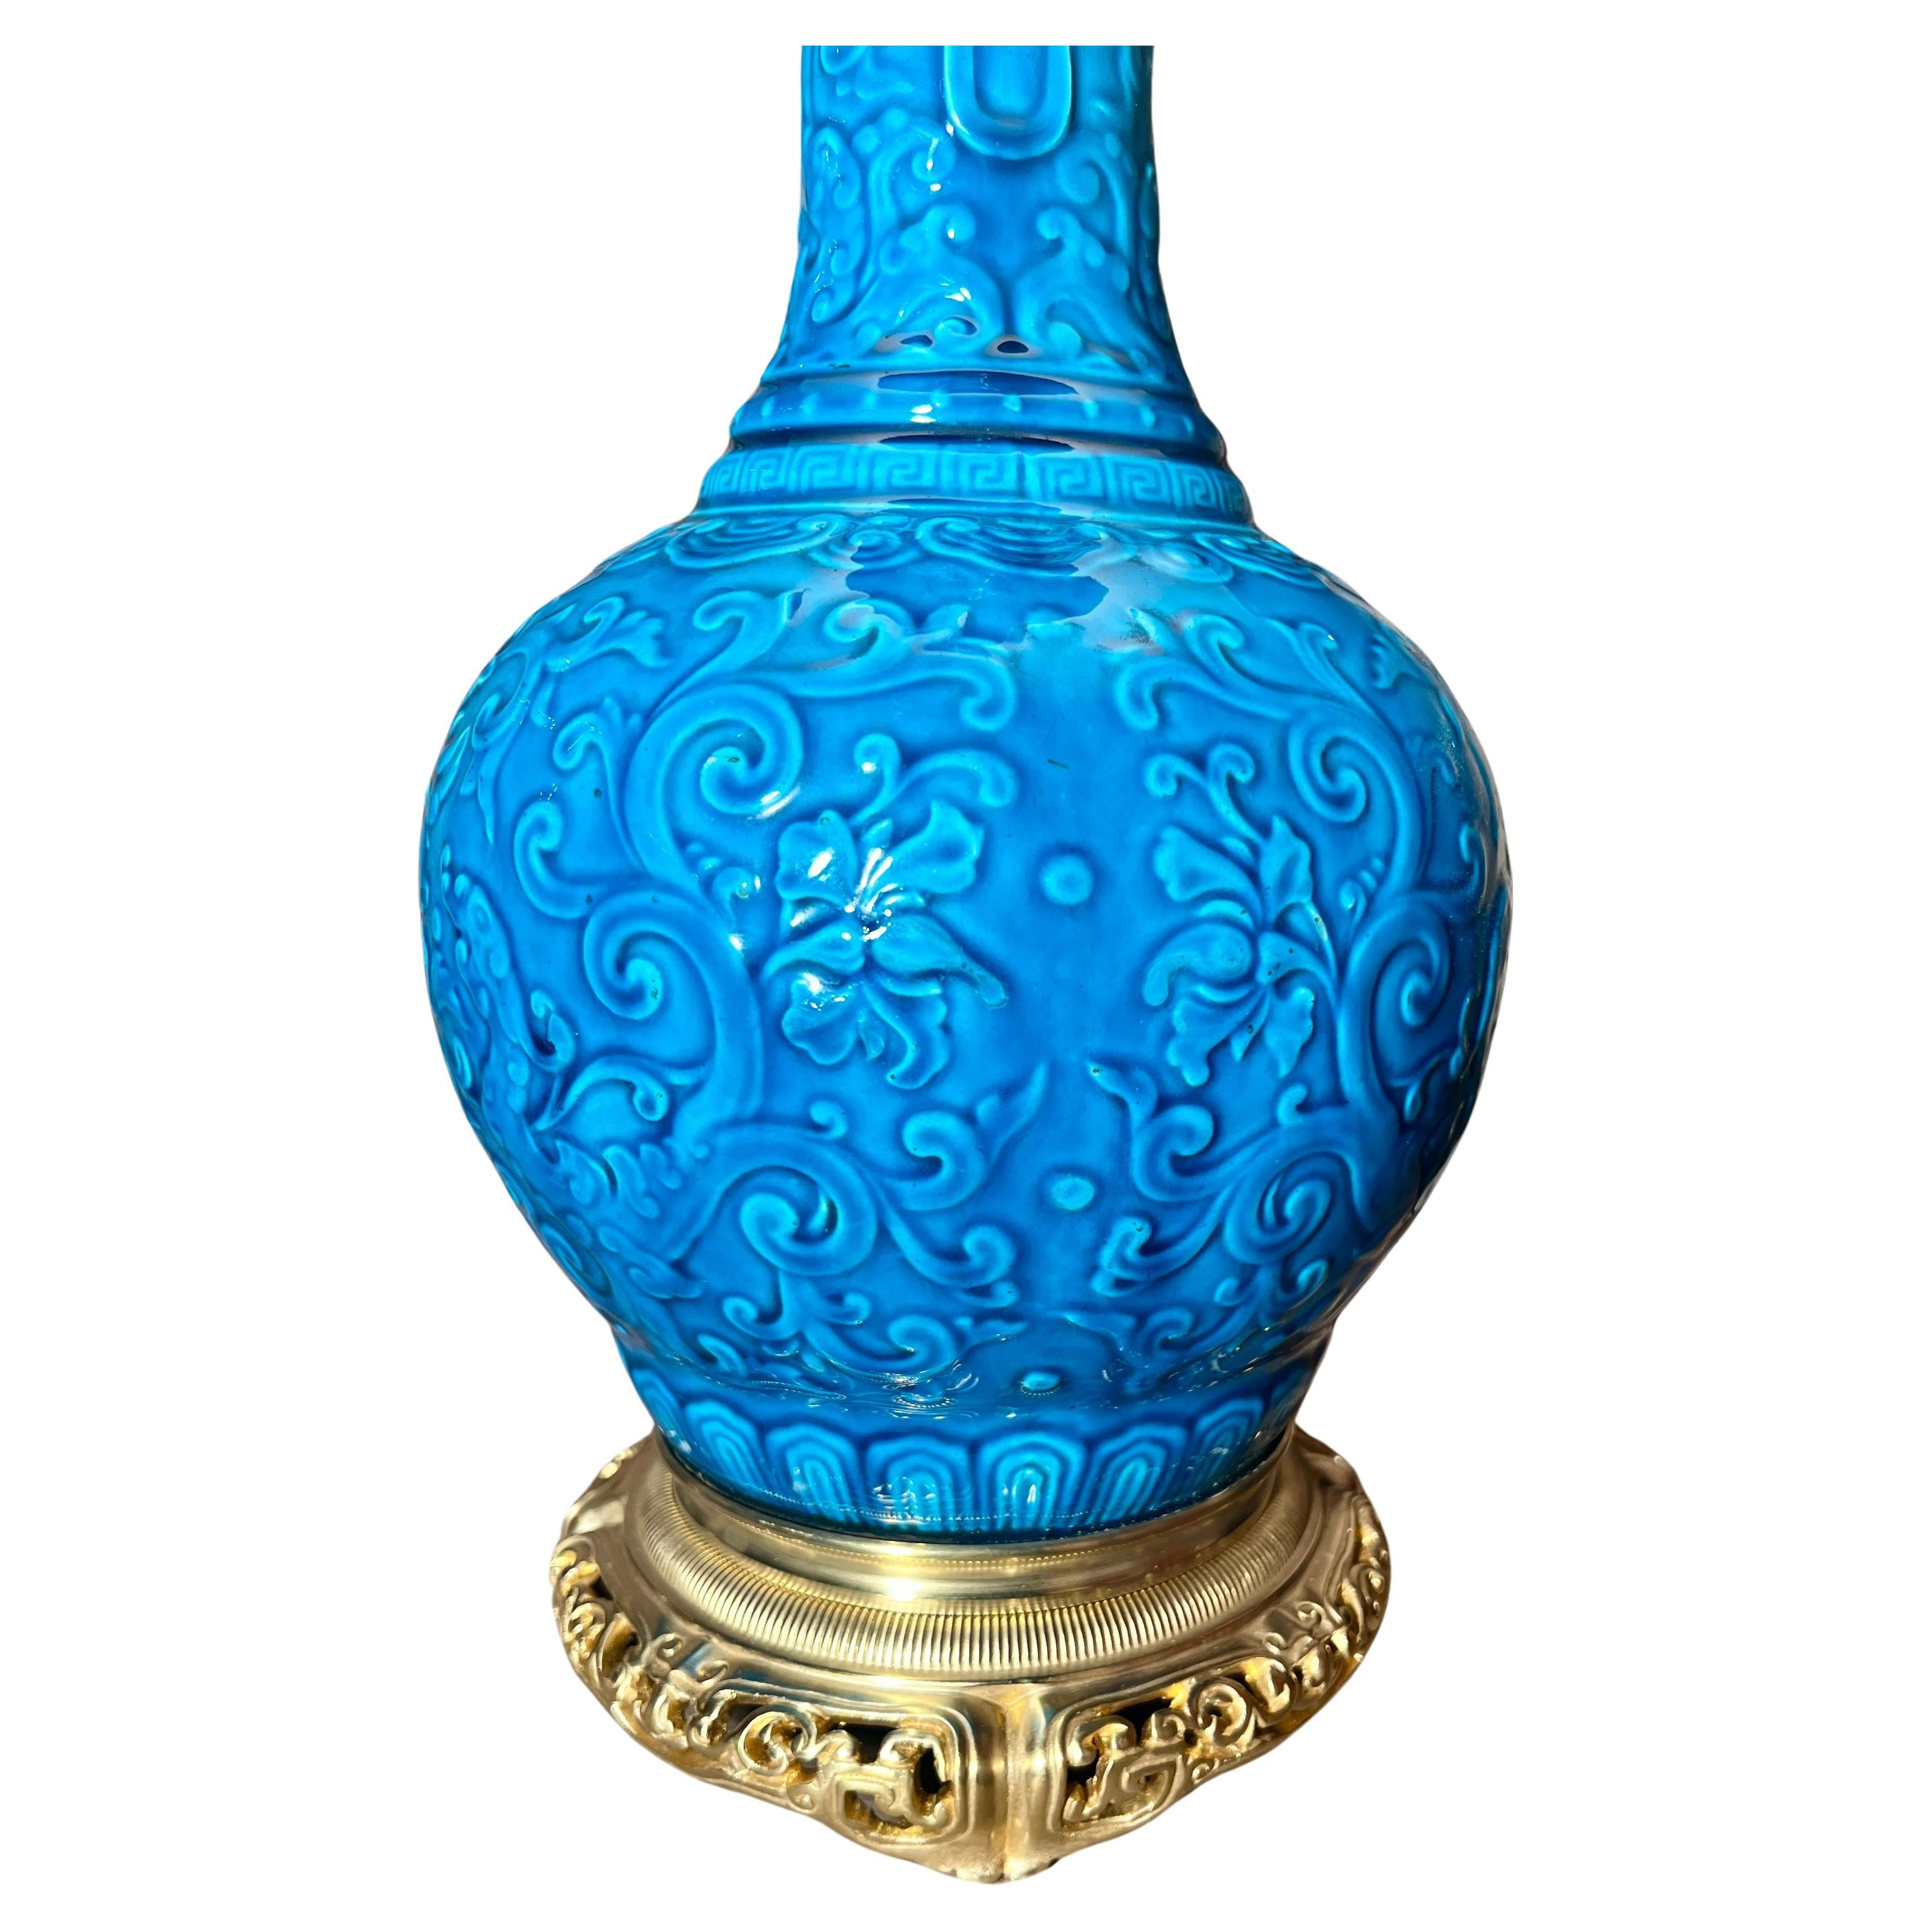 Antique French Vibrant Color Blue Porcelain Lamp with Ormolu Mounts, Circa 1885-1890.